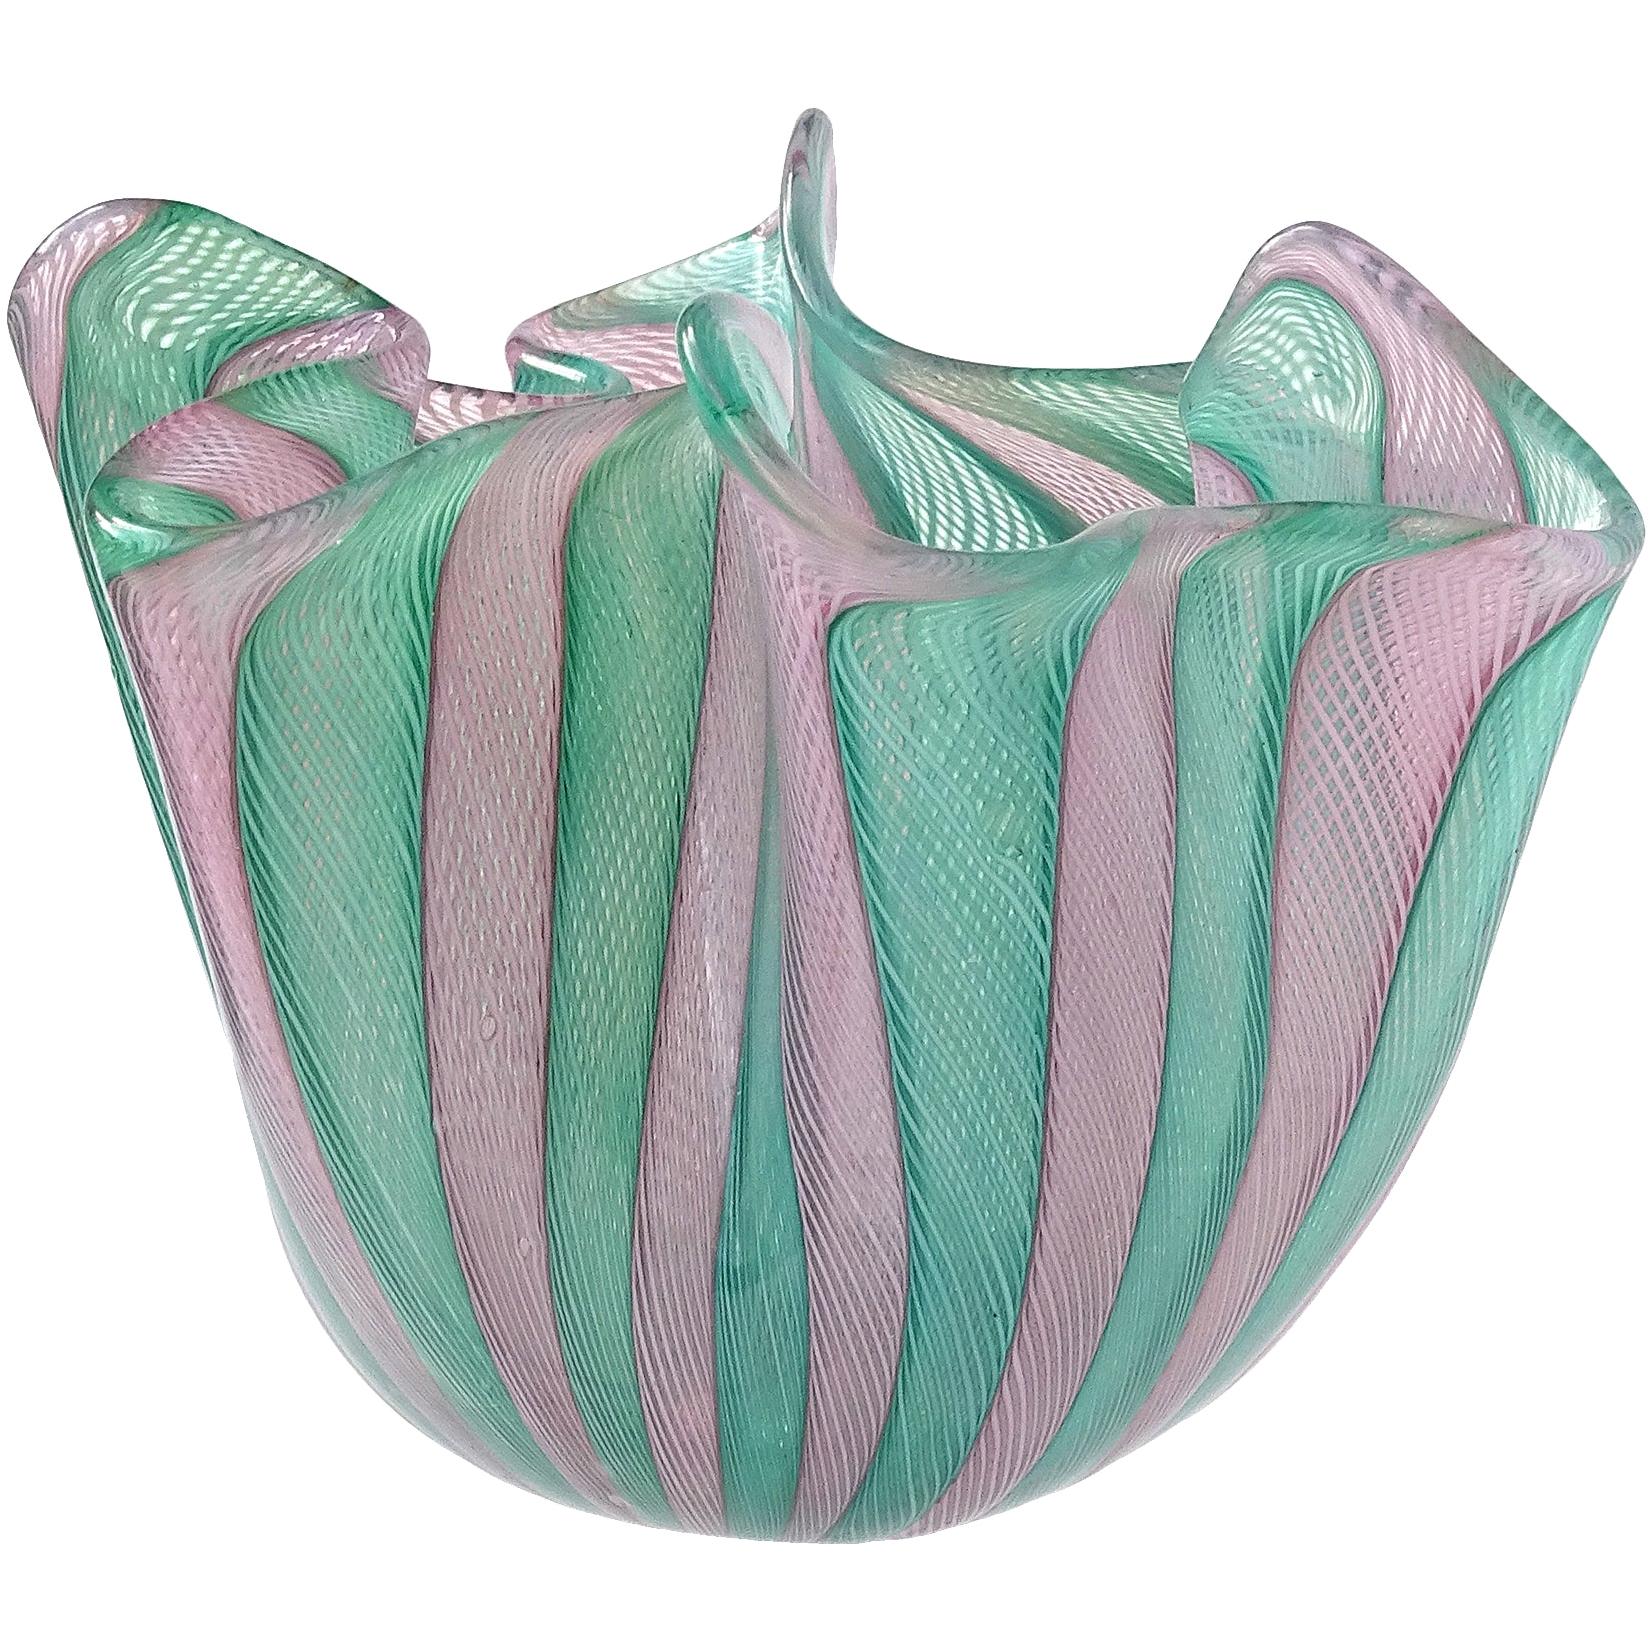 Venini Bianconi Murano Italian Art Glass Fazzoletto Handkerchief Ribbons Vase